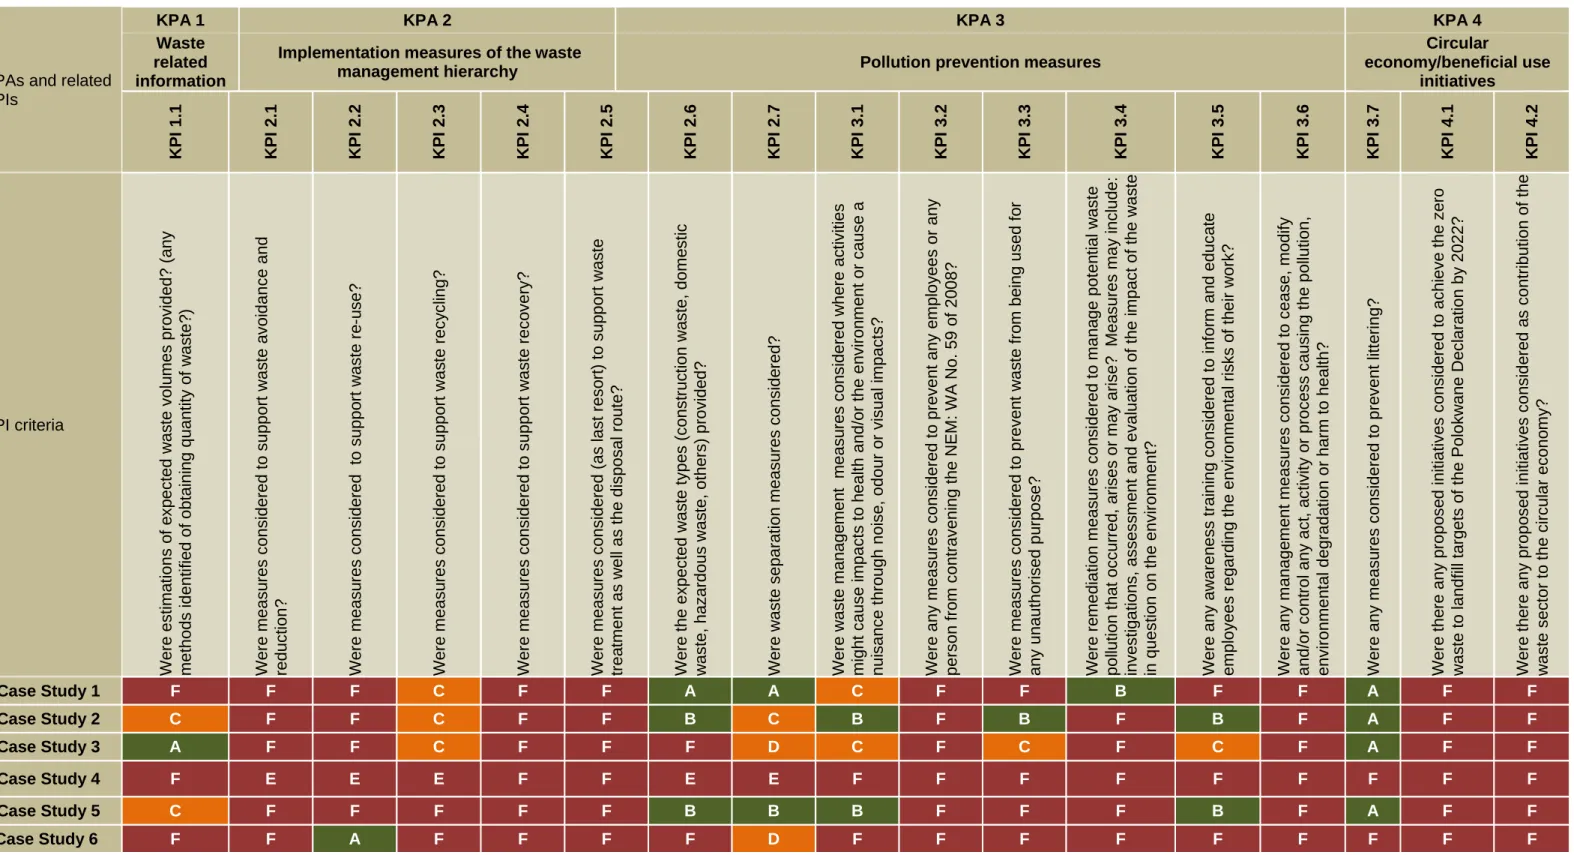 Table 4-1:  Meta-matrix indication performance scores across KPIs 